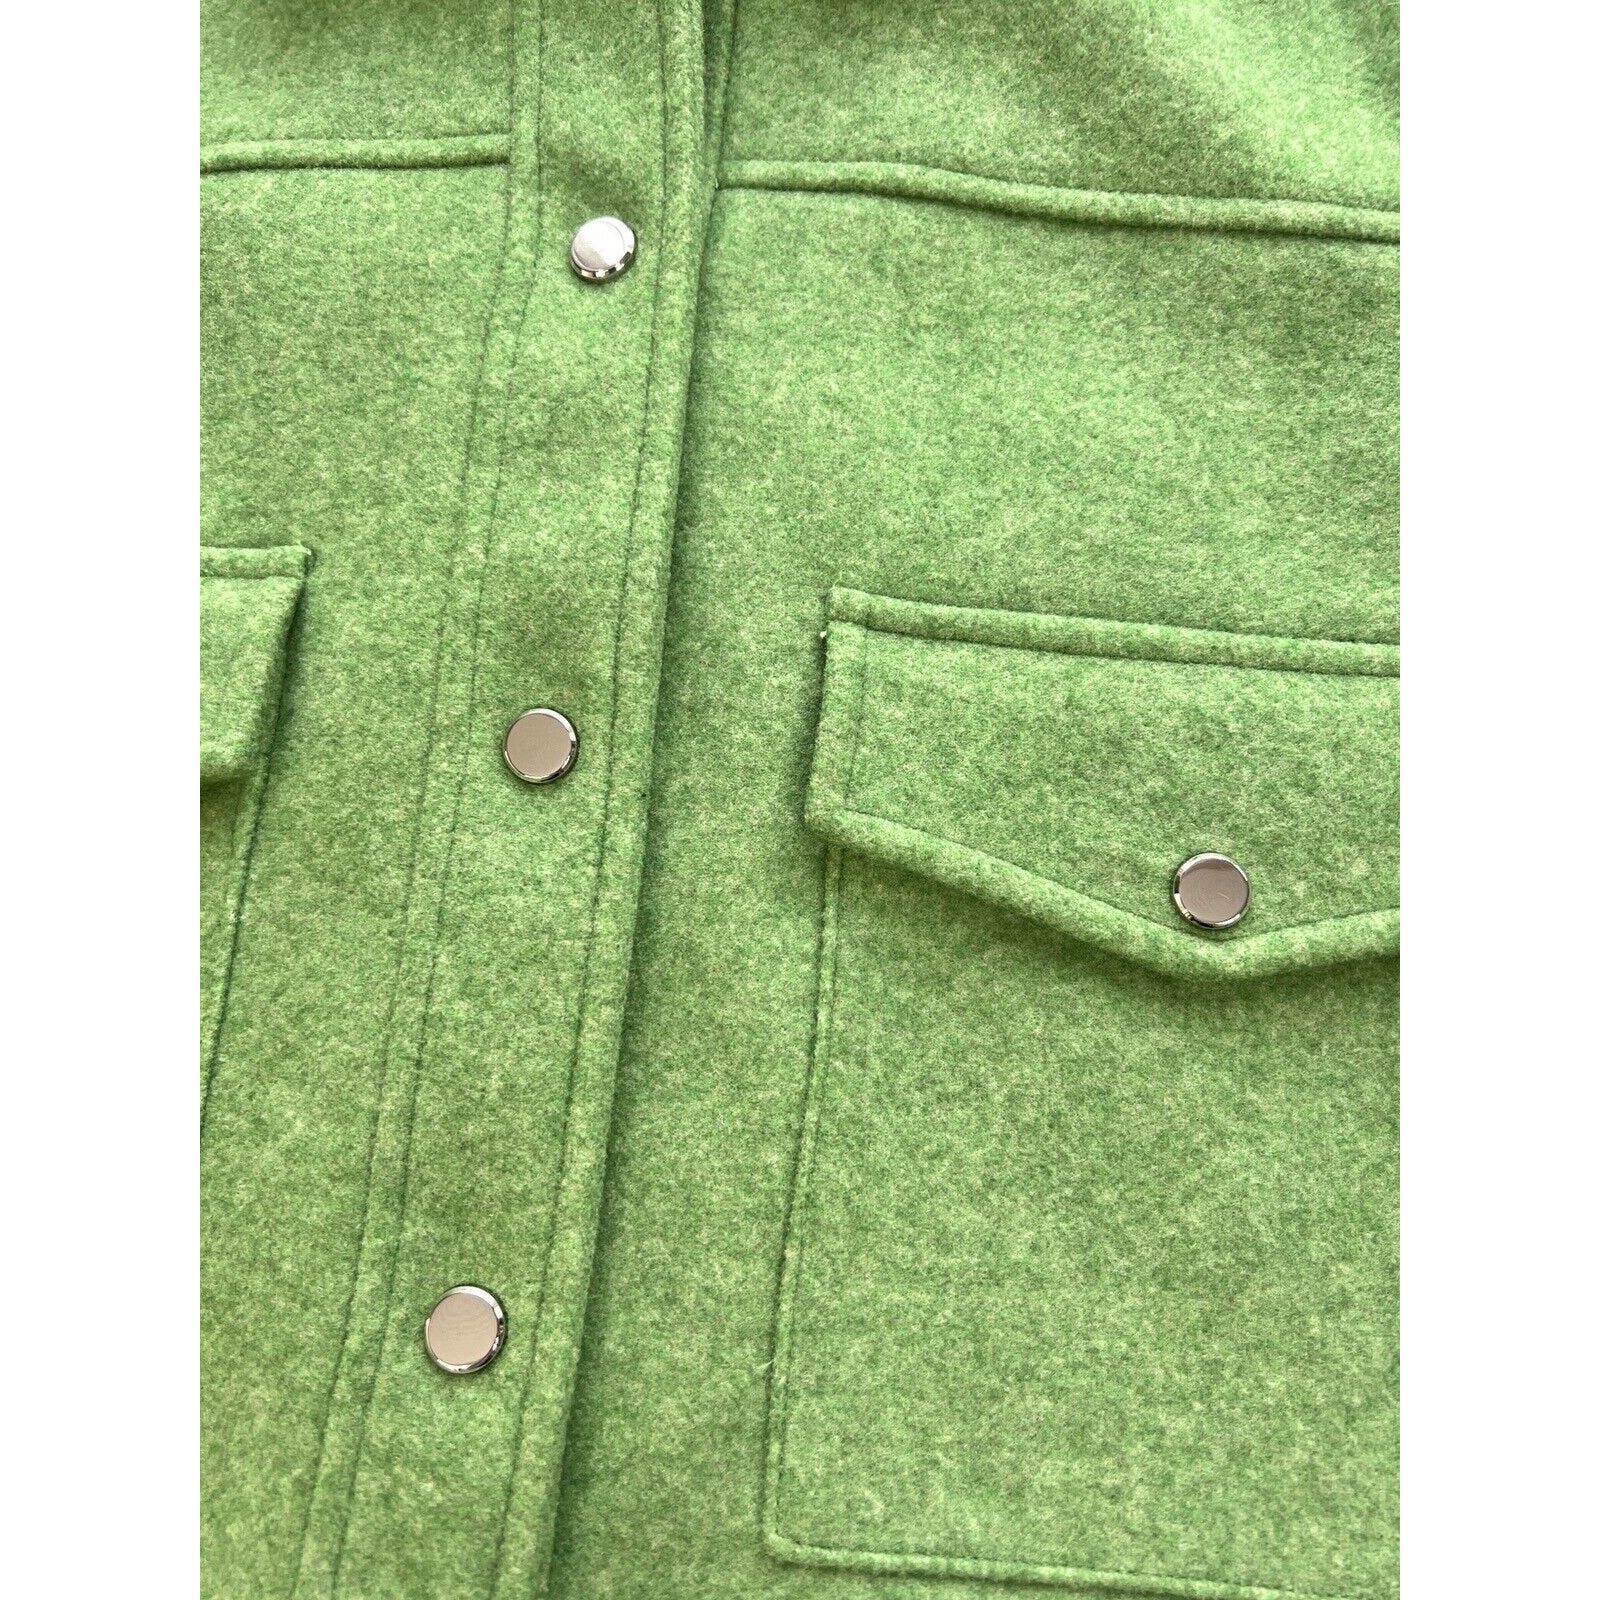 Zara Cropped Shacket Womens Small Coat Green Silver Snaps Soft Cozy Green